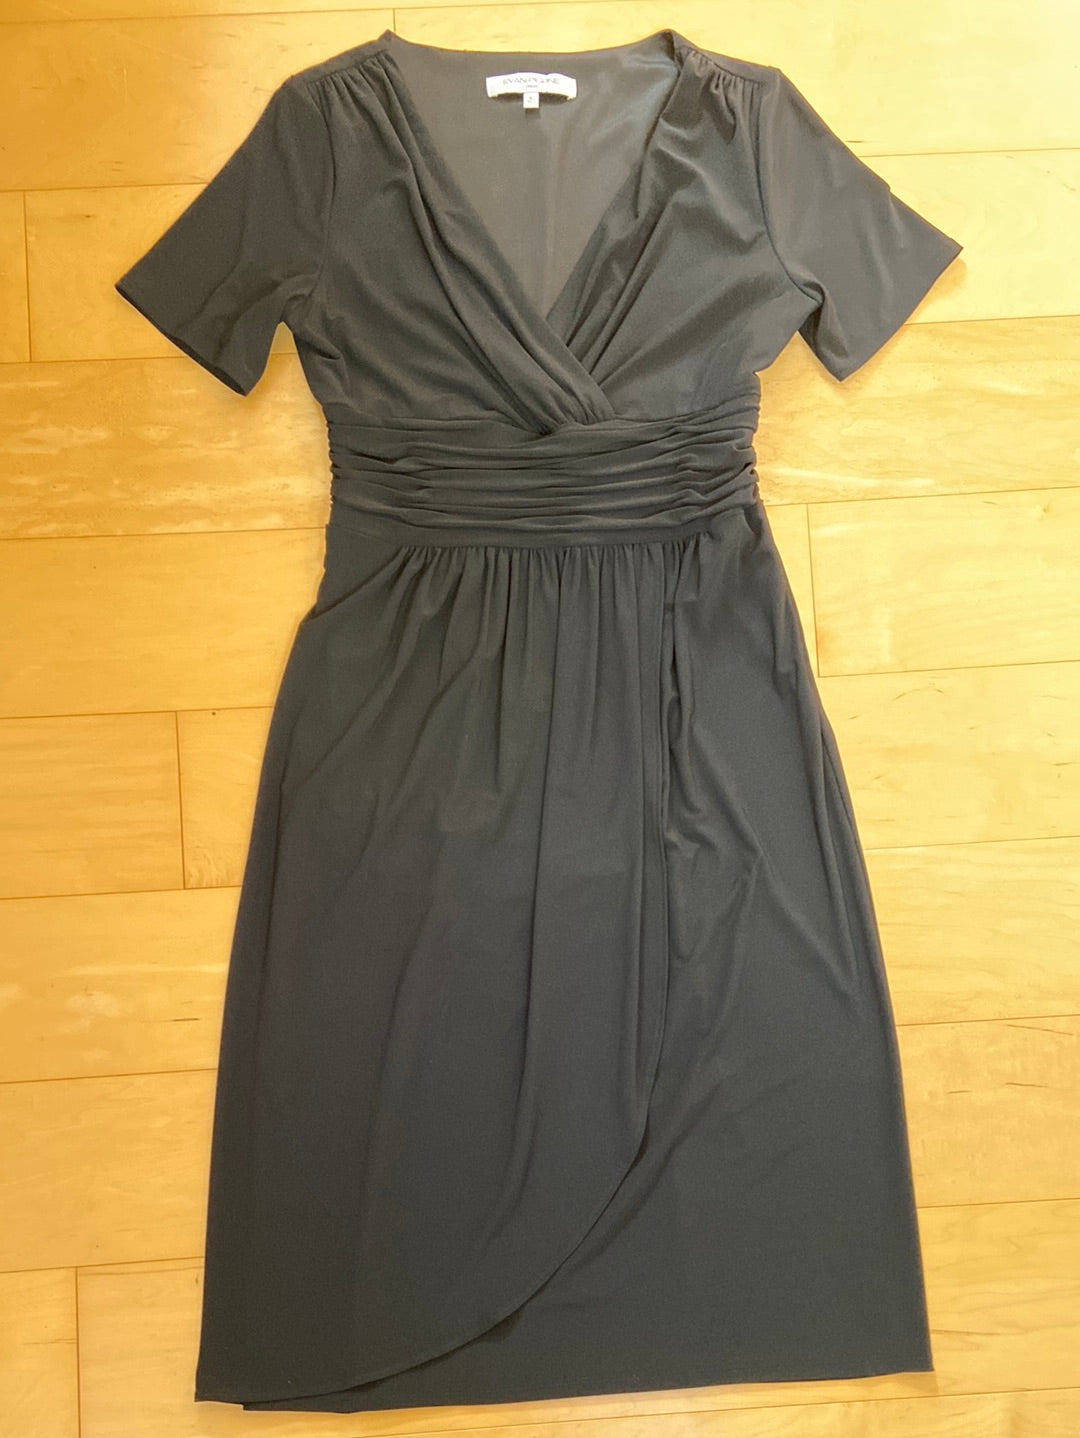 BLACK BEAUTY Evan Picone Black Dress Size 8